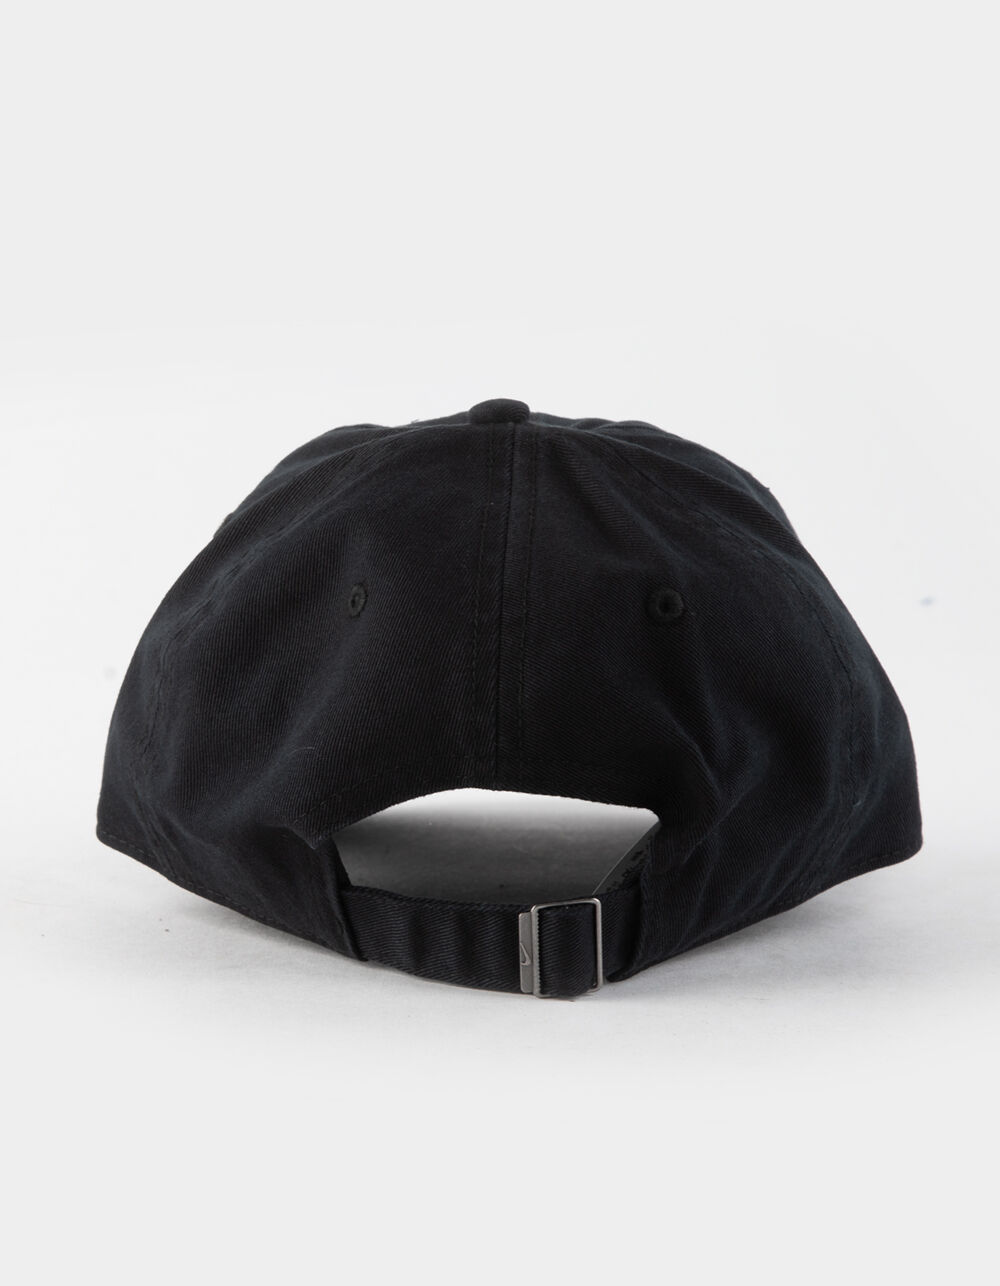  NIKE Women's Heritage86 Futura Classic Cap, Black/White, One  Size : Clothing, Shoes & Jewelry